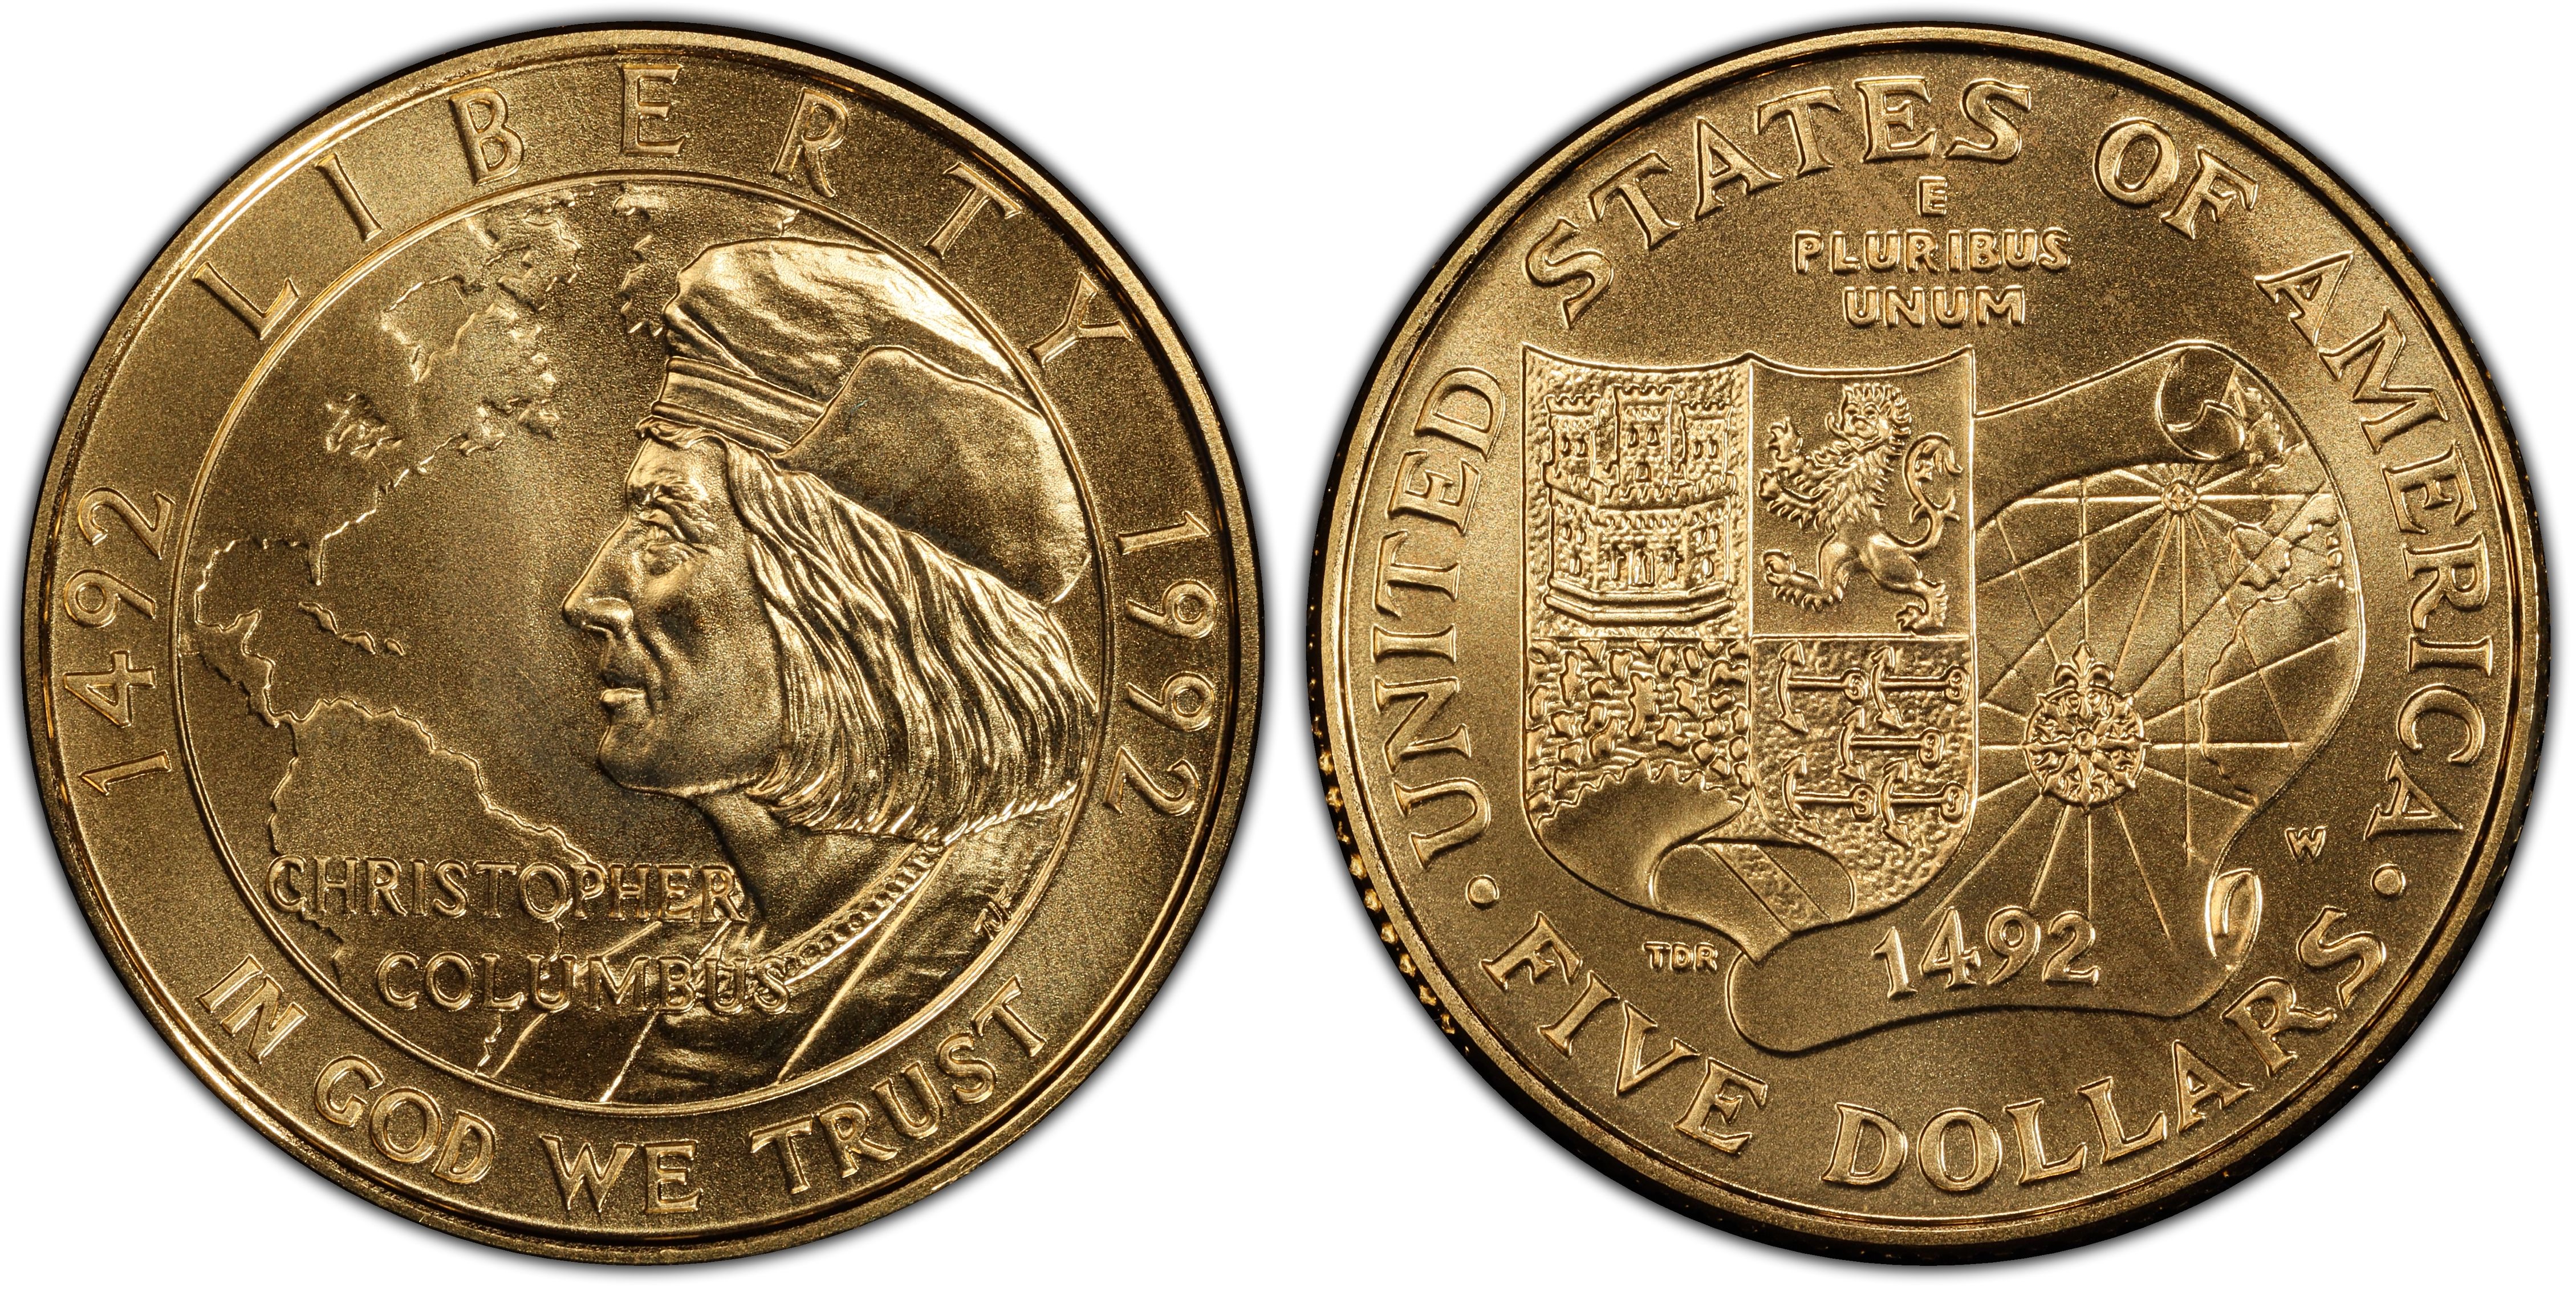 Compare $5 Gold Commemorative Coins dealer prices